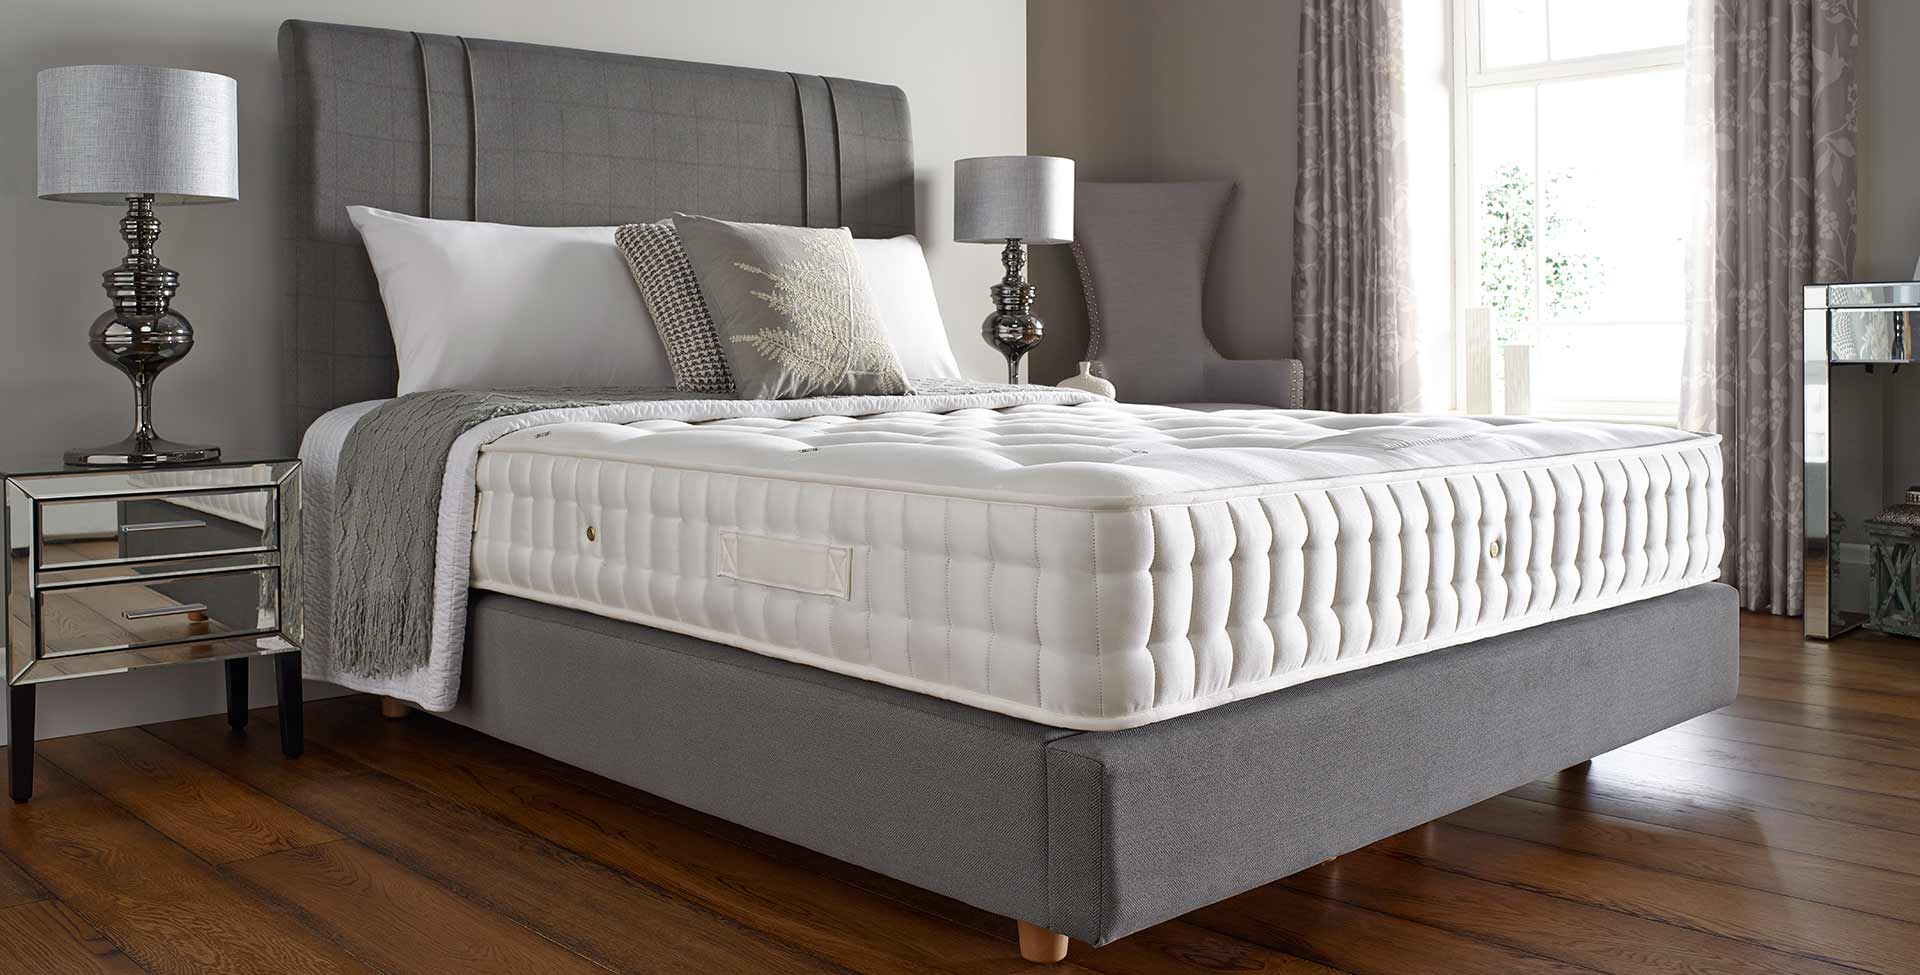 harrison onyx 7700 king size mattress